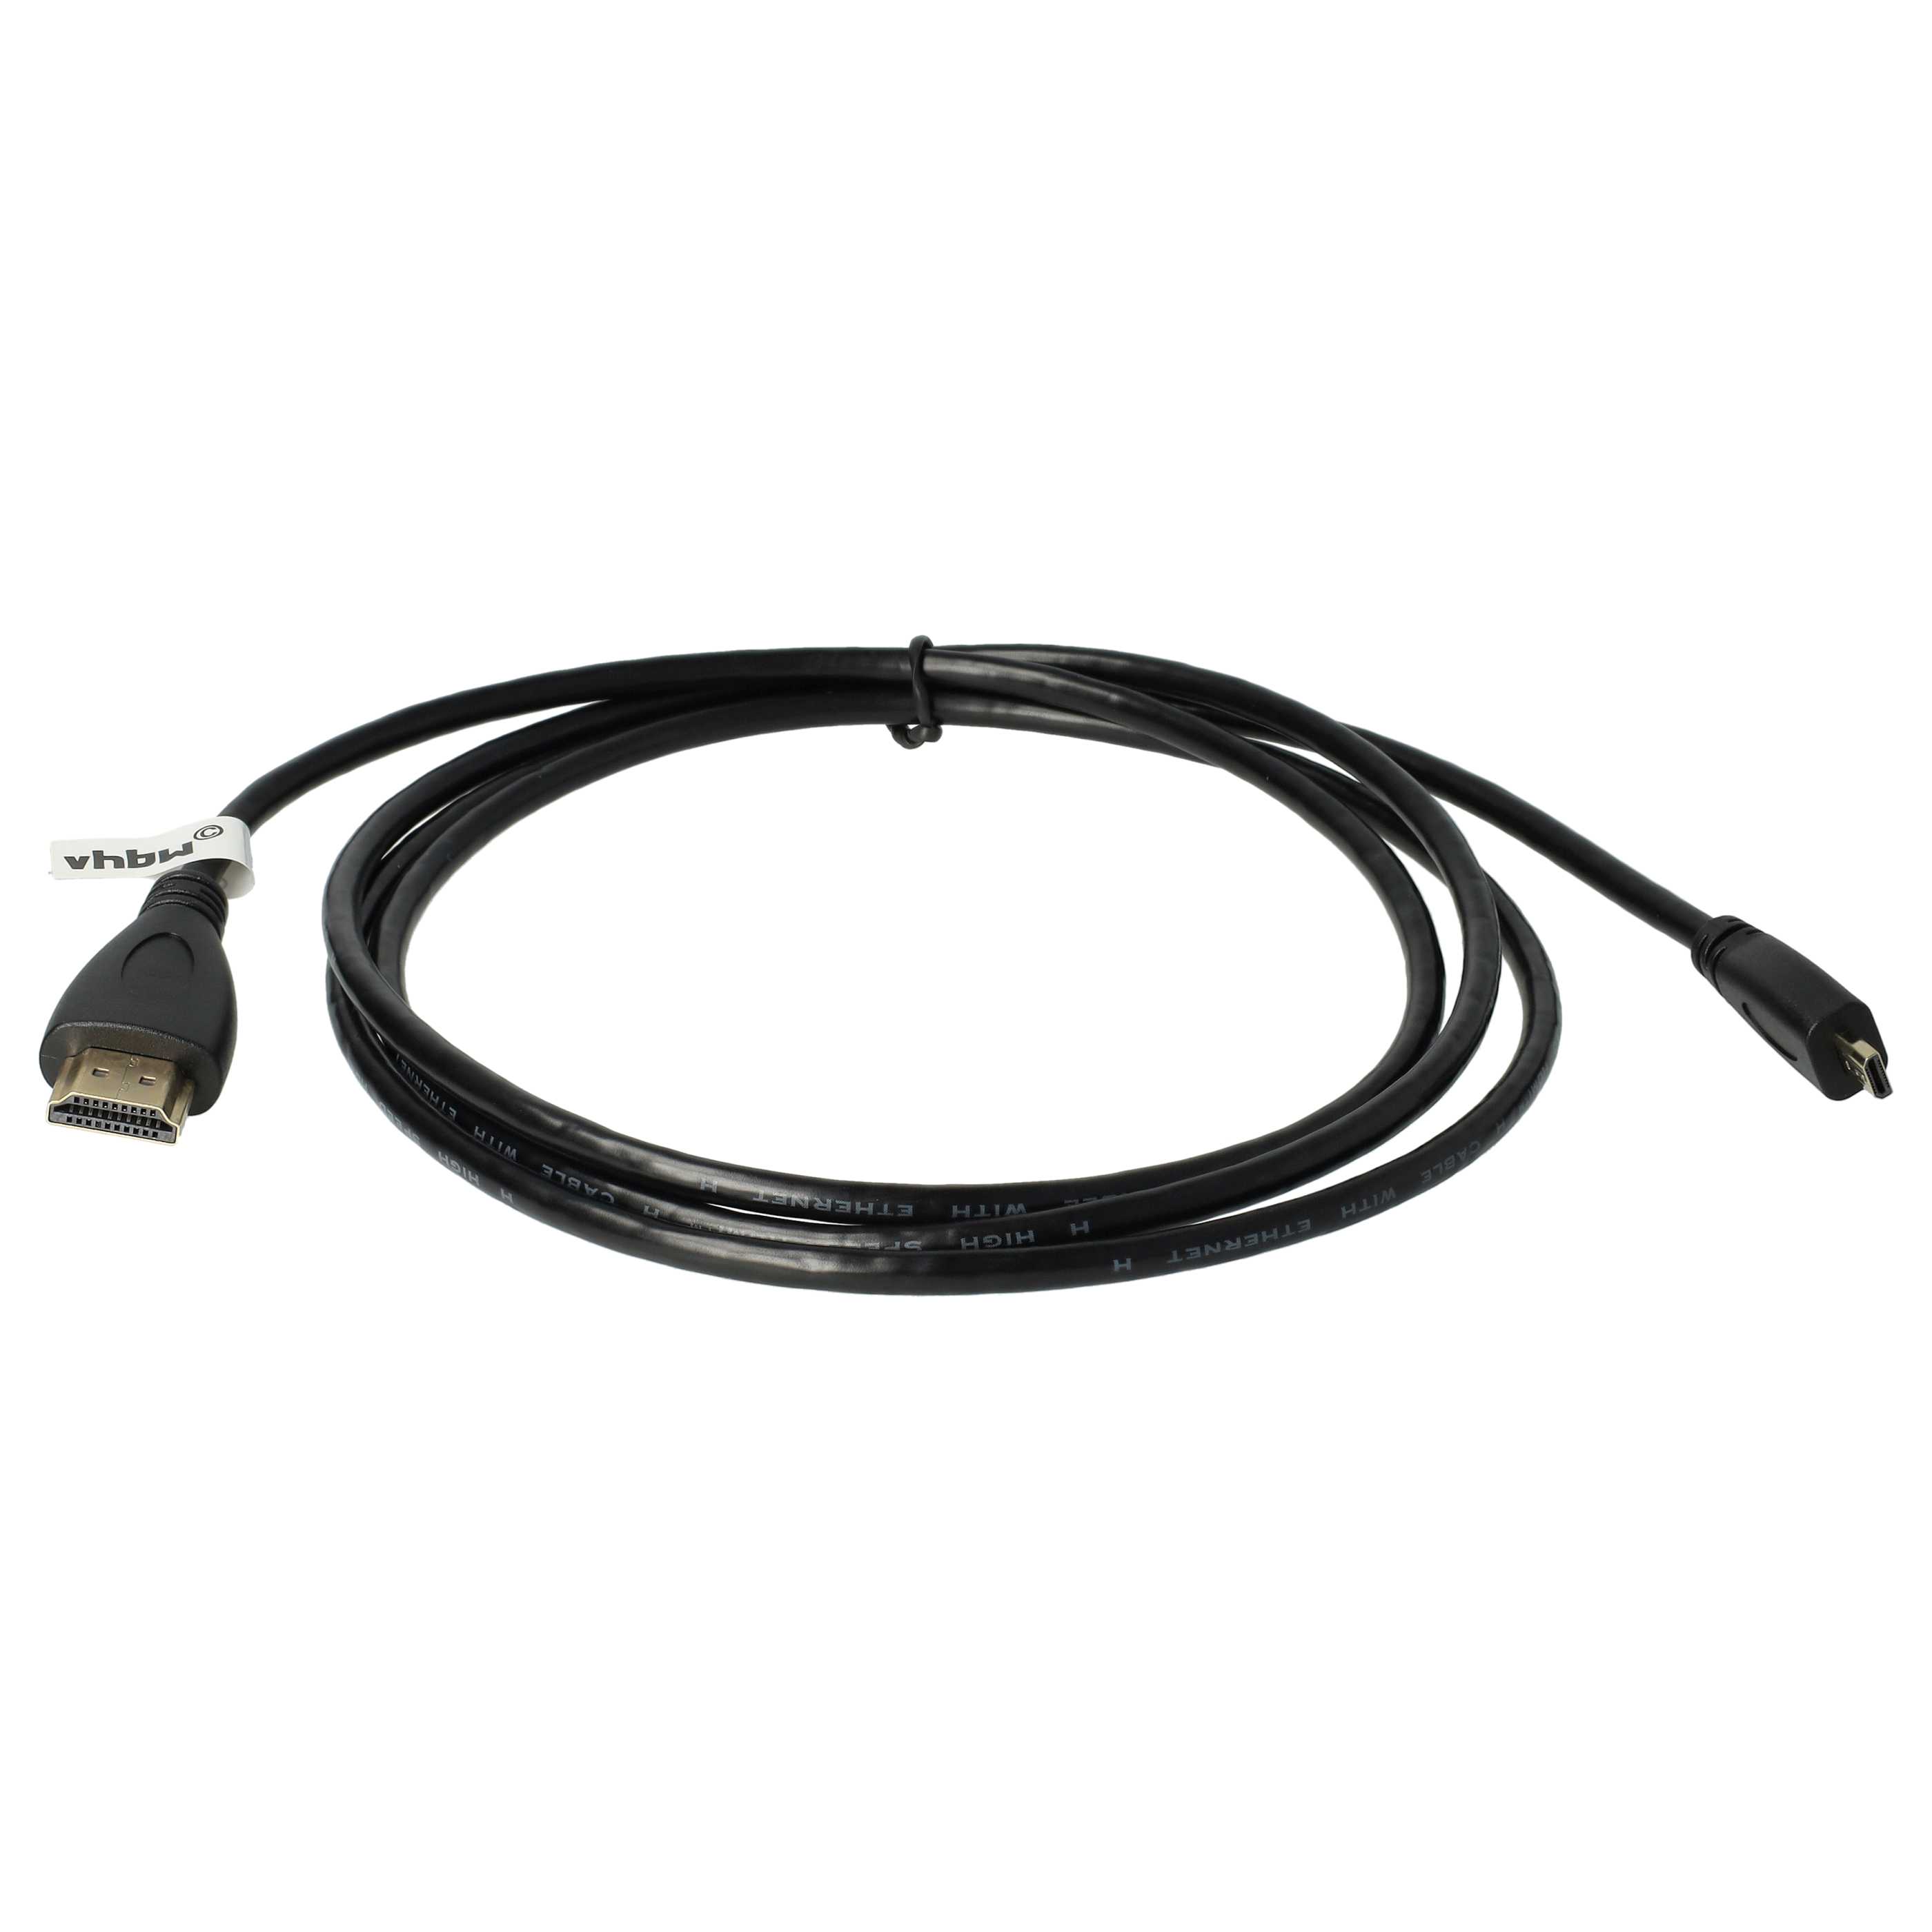 Câble HDMI, Micro-HDMI vers HDMI 1.4 1,4m pour Tablette, Smartphone, appareil photo